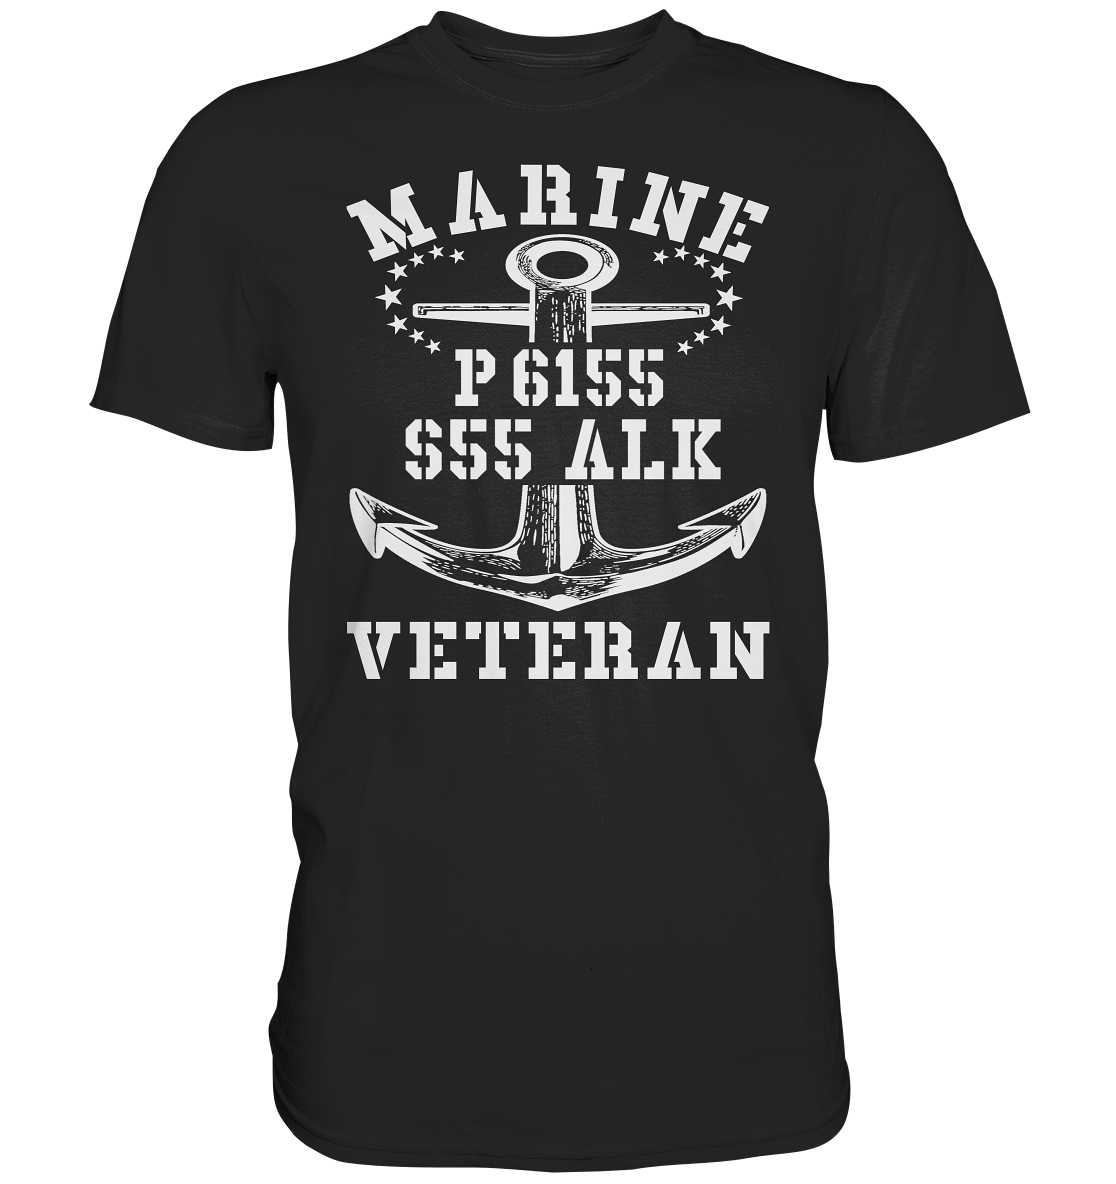 P6155 S55 ALK Marine Veteran - Premium Shirt